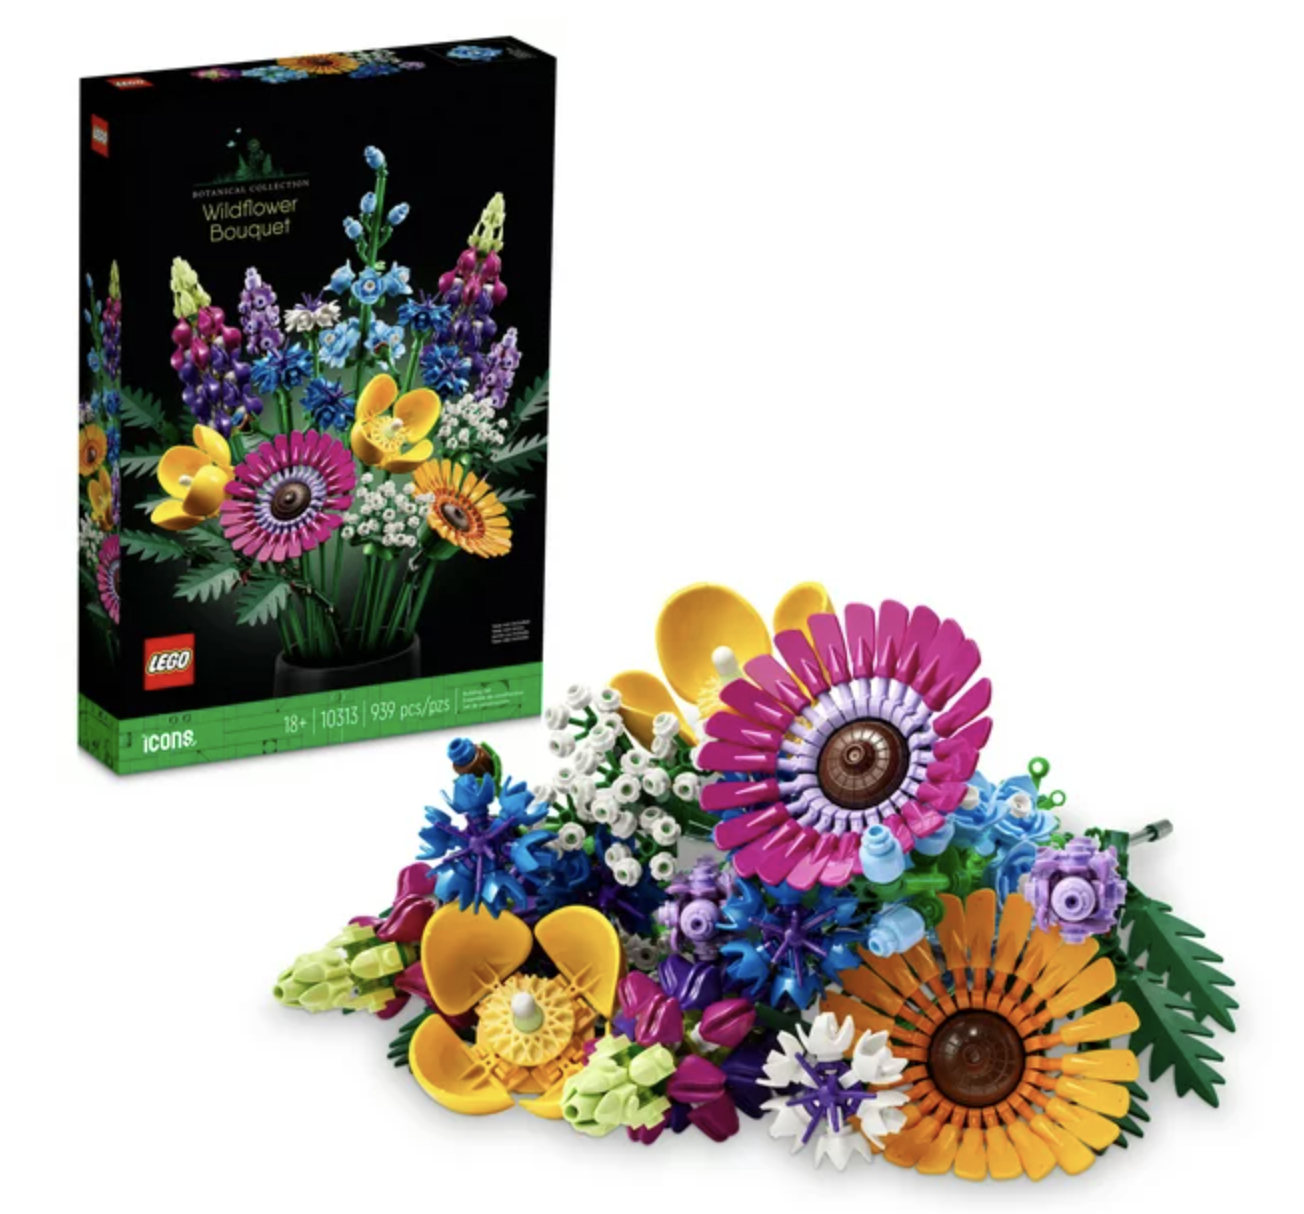 Lego set of wildflowers